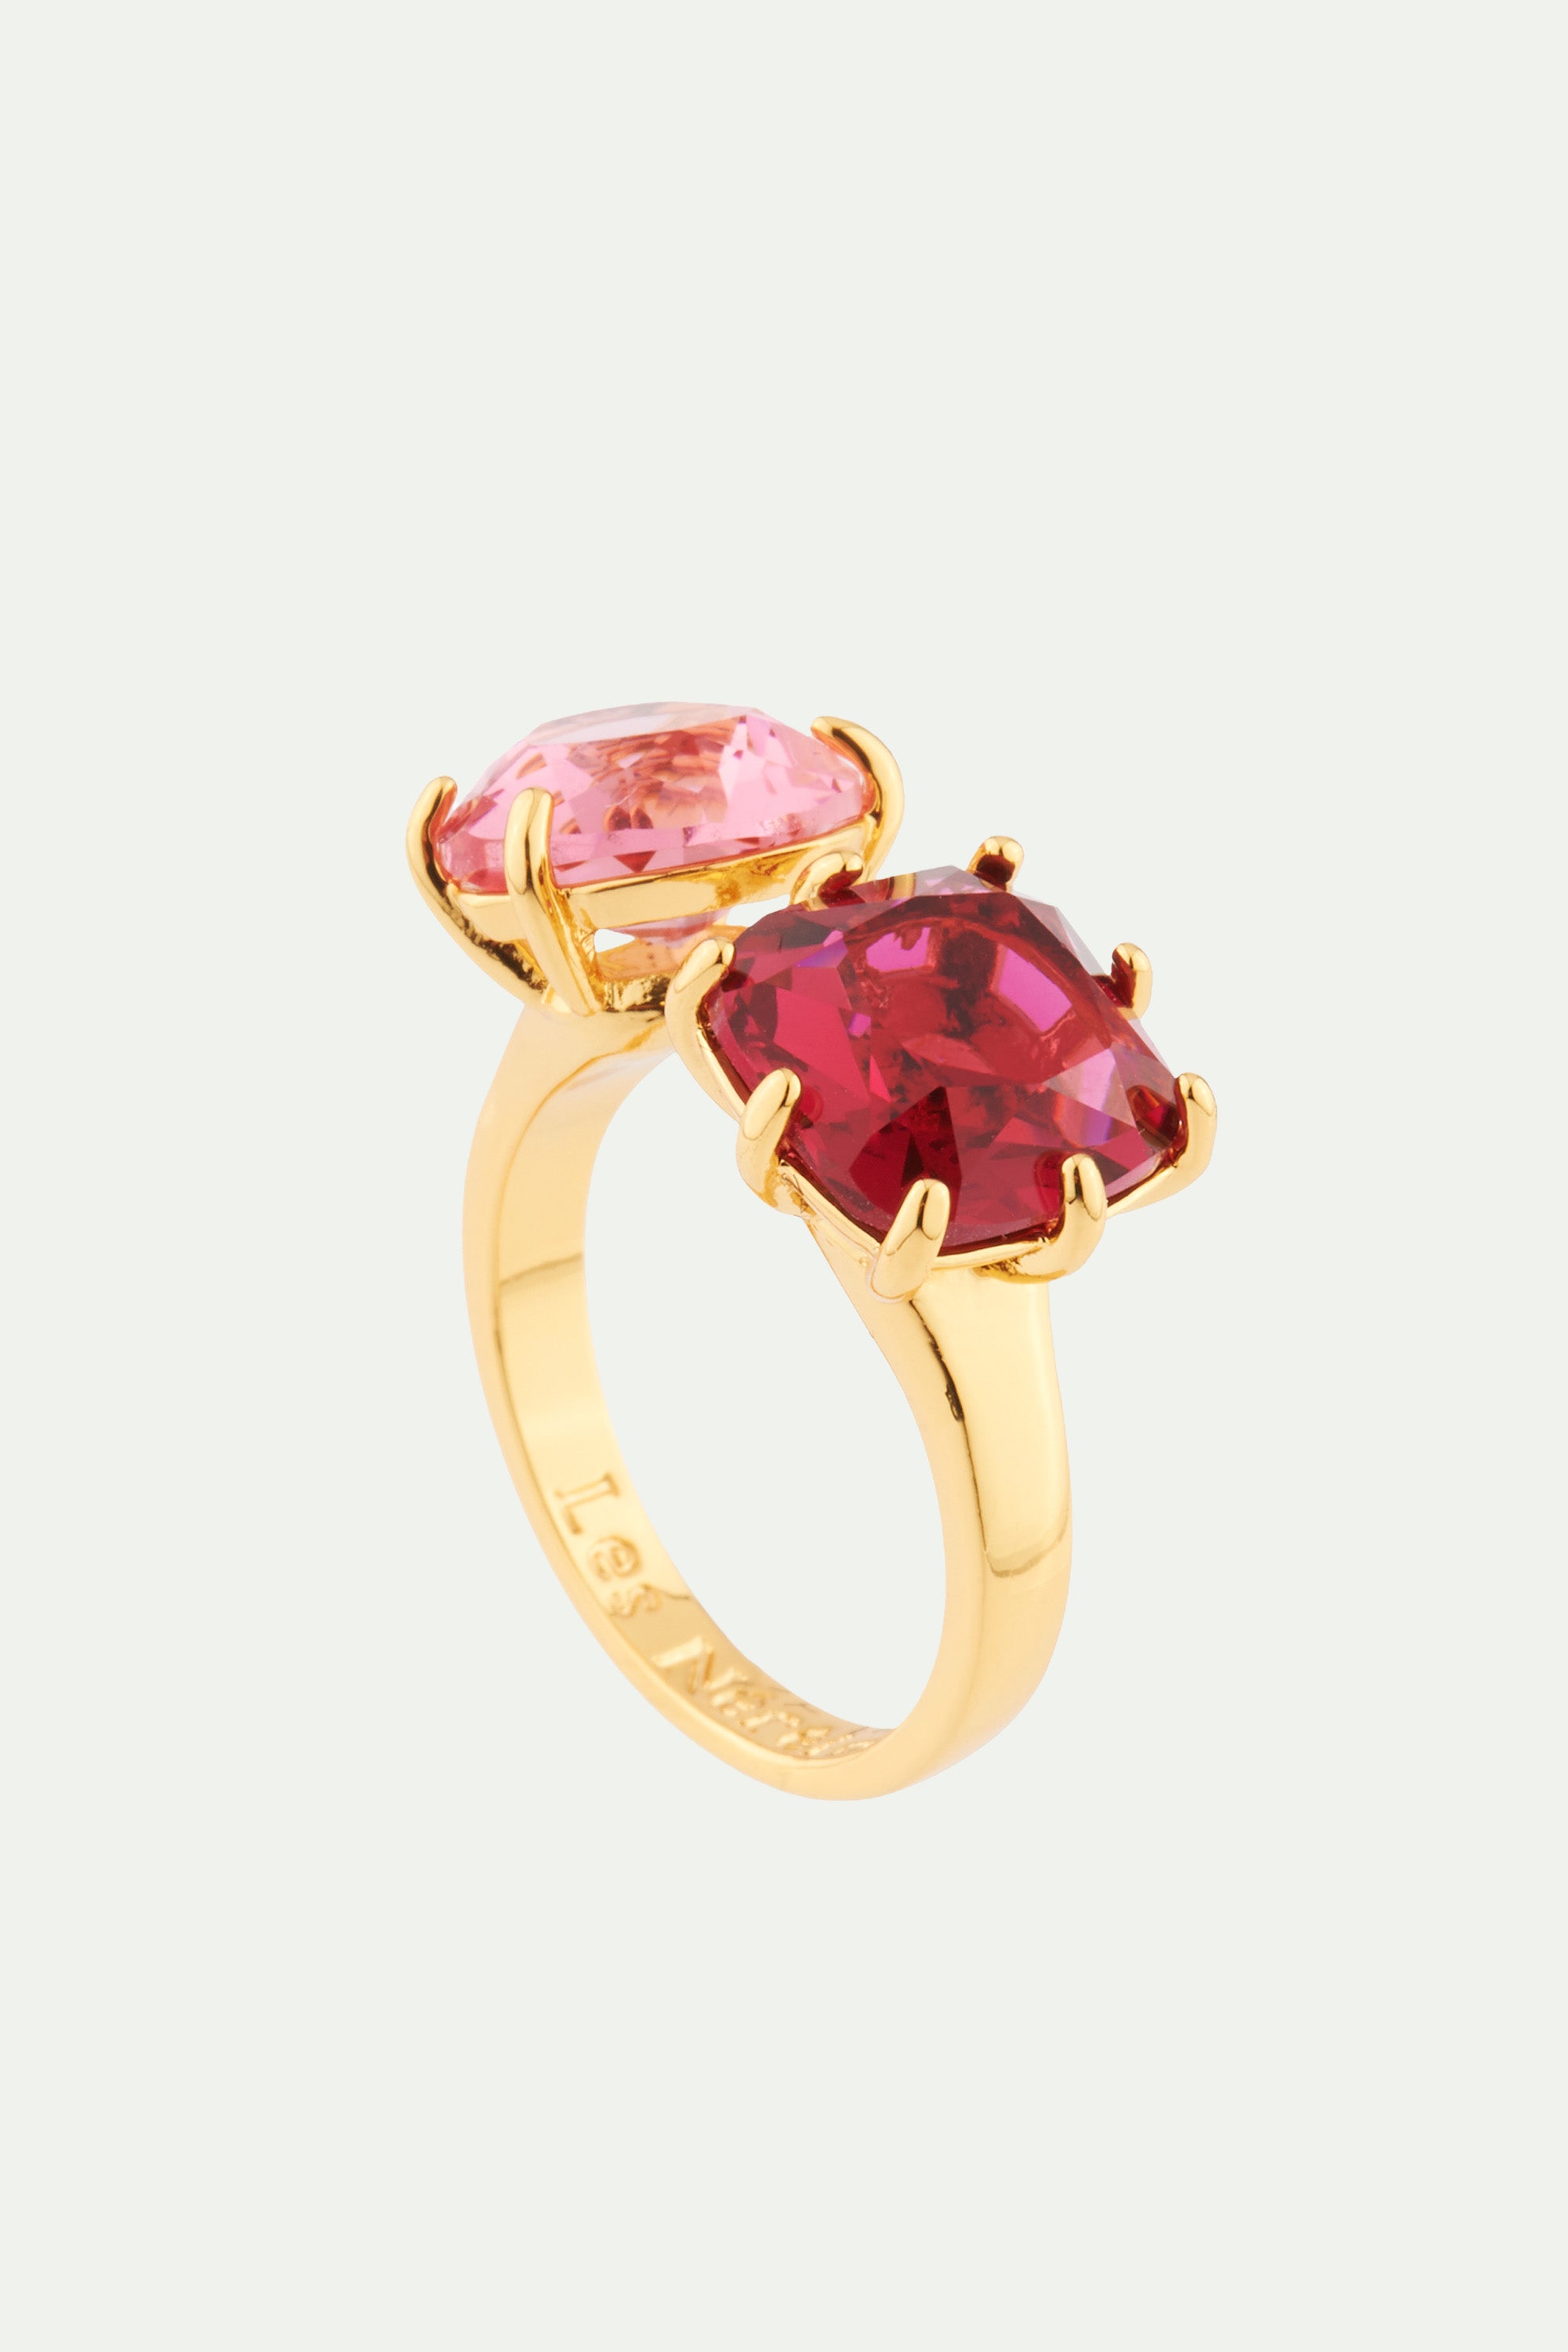 Heart shaped pink peach and red square stones La Diamantine Multico...